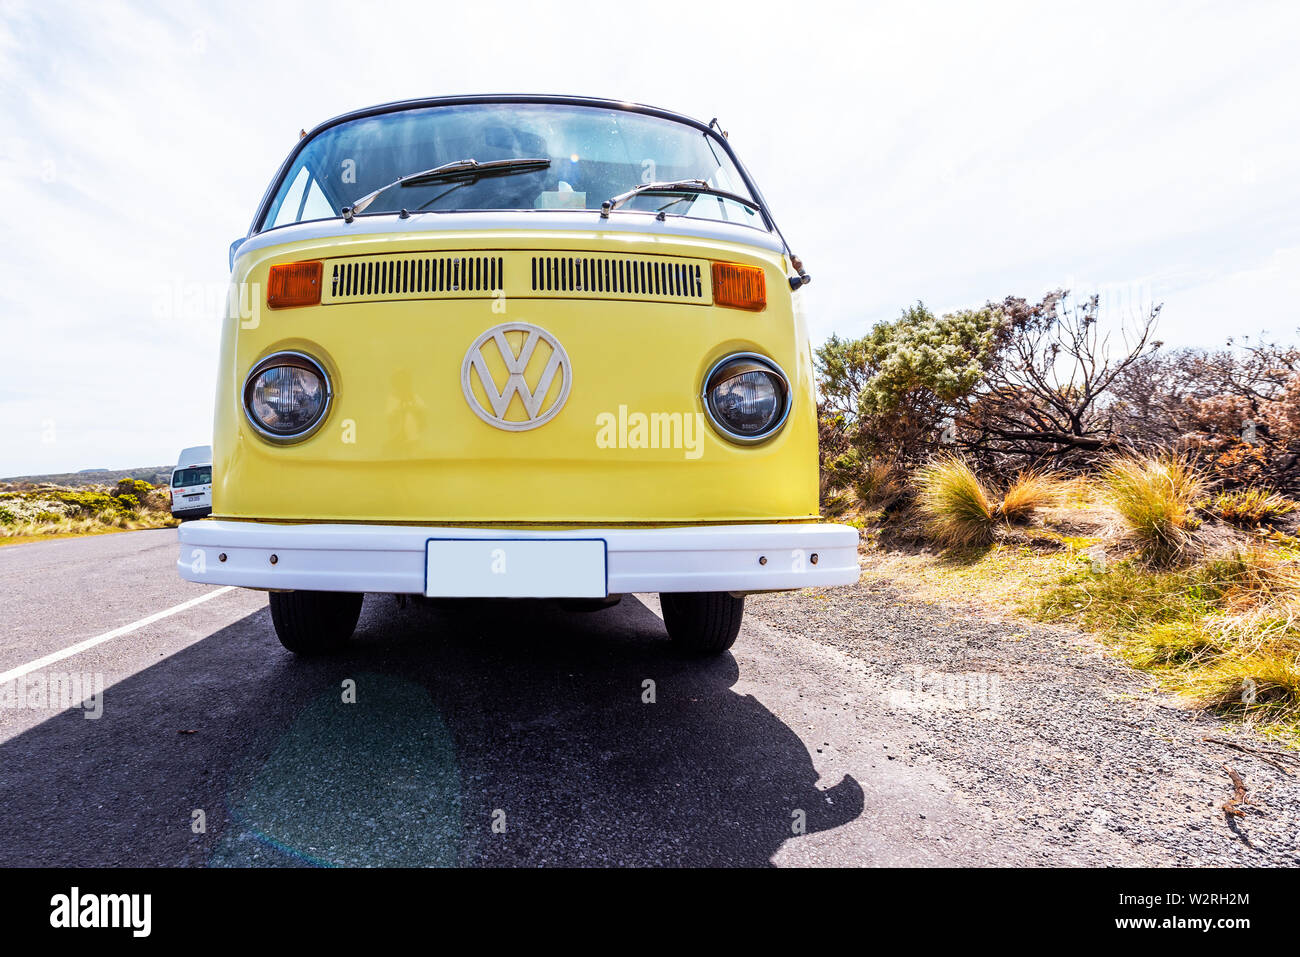 VICTORIA, AUSTRALIA - OCTOBER 30, 2018: Yellow retro Volkswagen van on the road Stock Photo